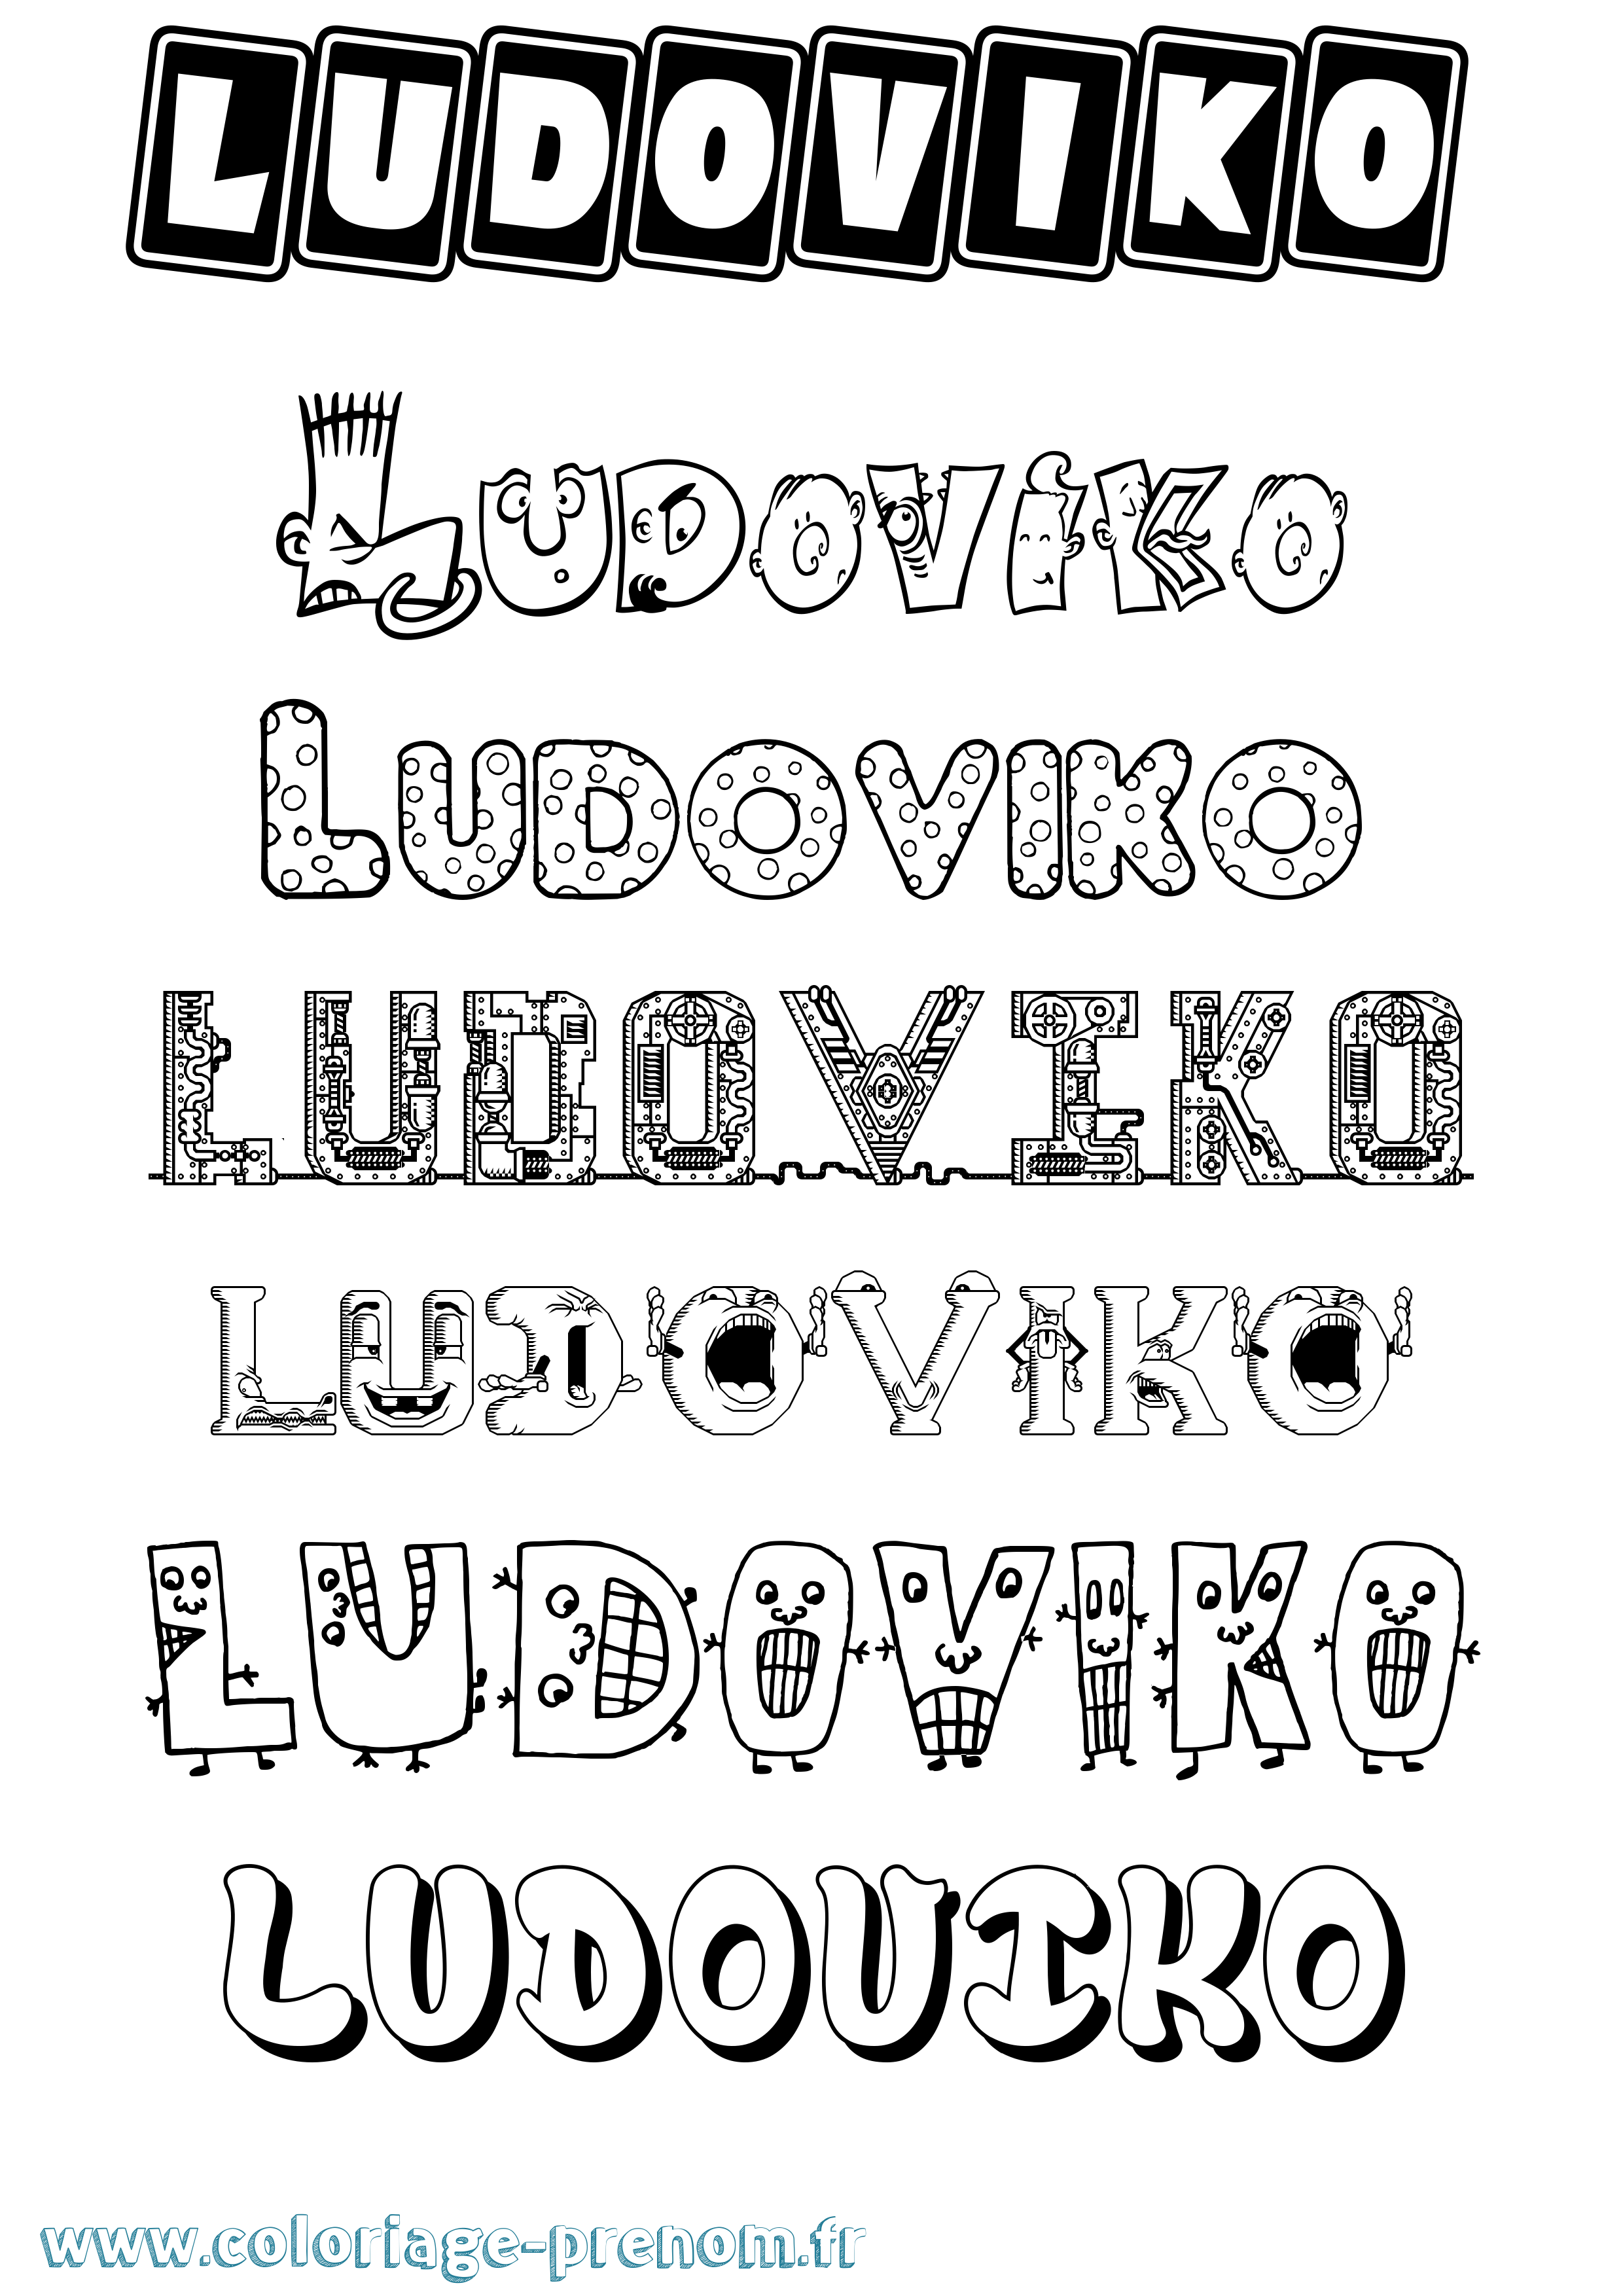 Coloriage prénom Ludoviko Fun